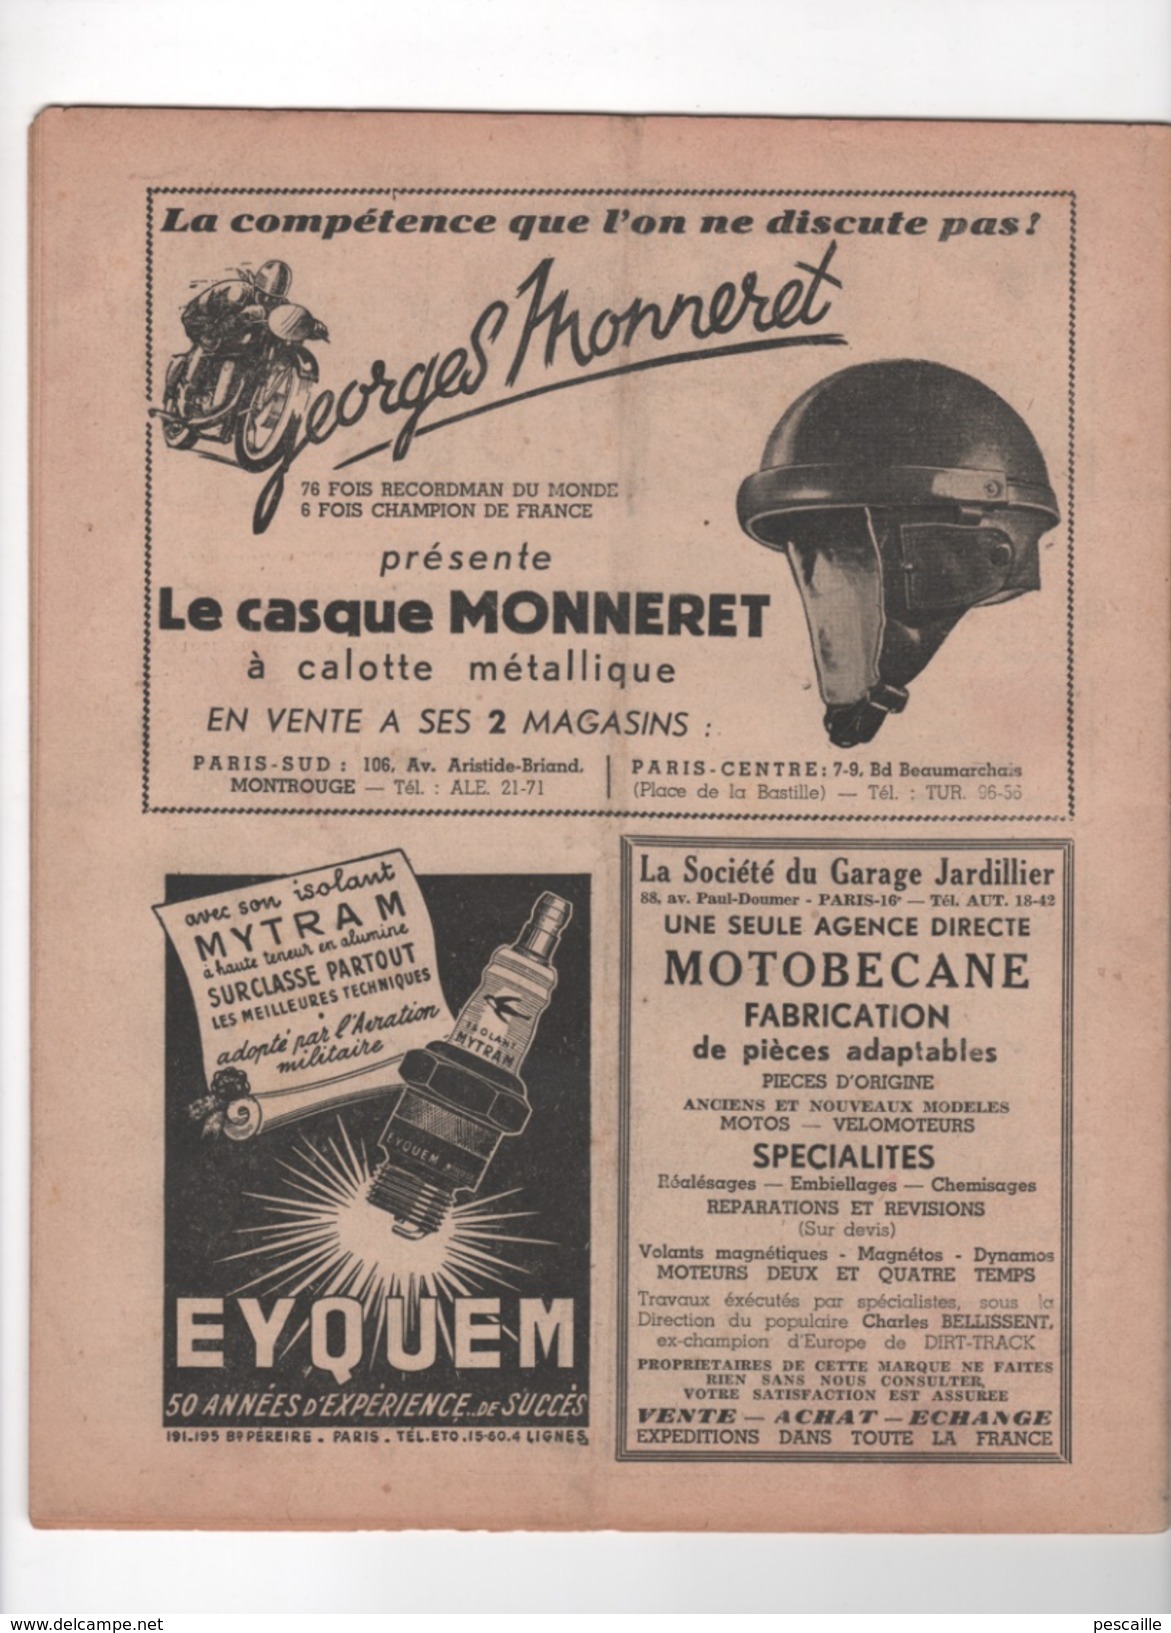 MOTO REVUE 4 06 1948 - MOTO-CROSS DE MONTREUIL - CULASSE DE MOTO - BOL D'OR - MOTO CARROSSEE - RACER 500 -